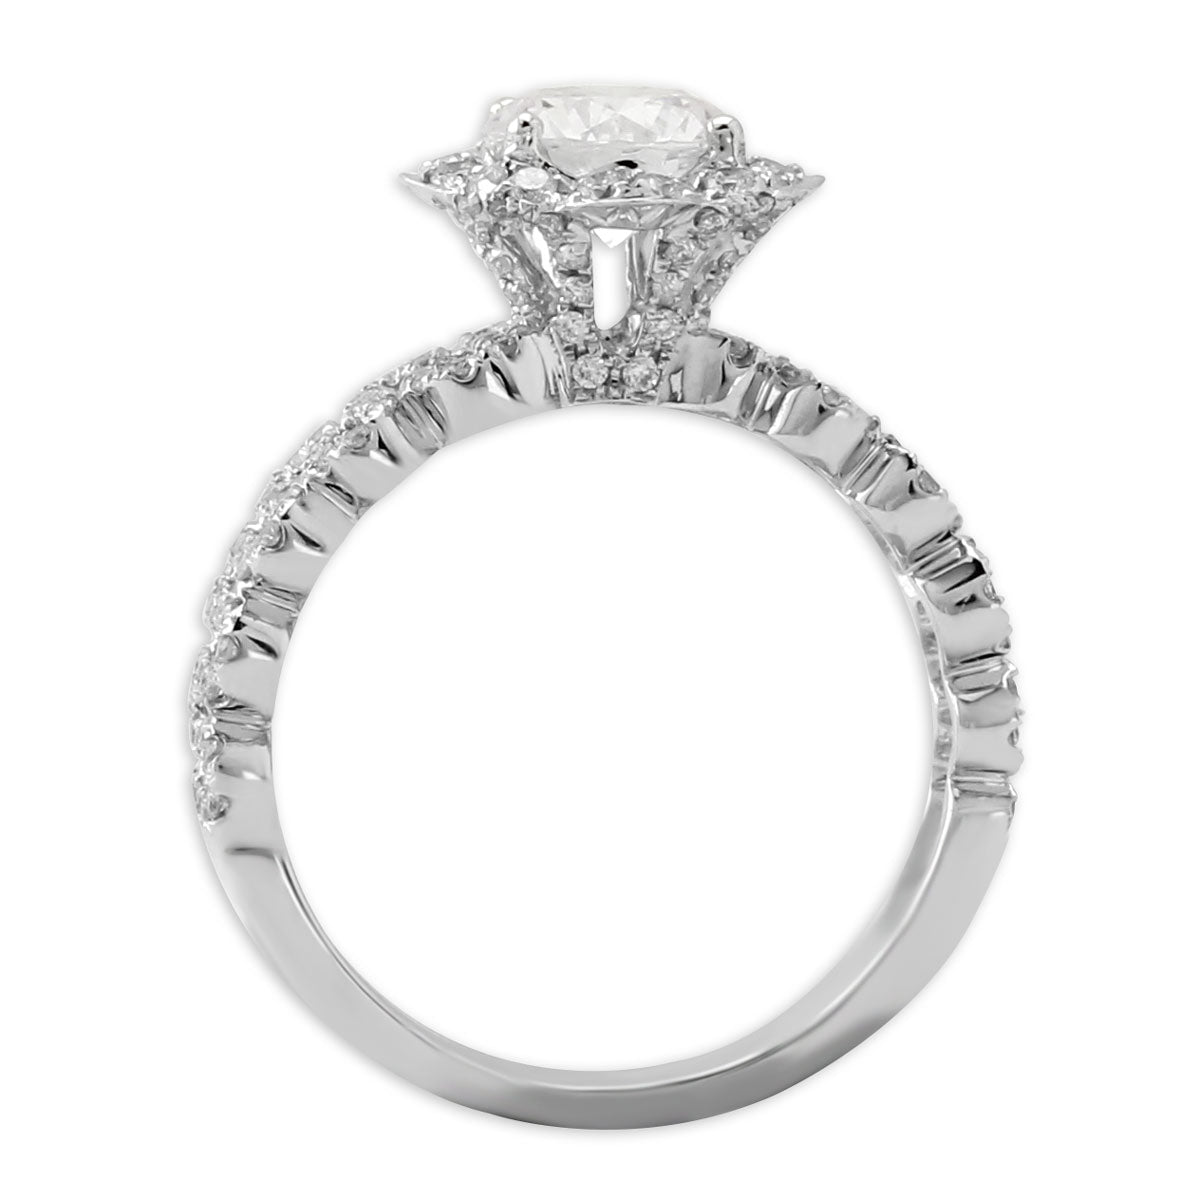 Diamond Engagement Ring with Teardrop Design 341803